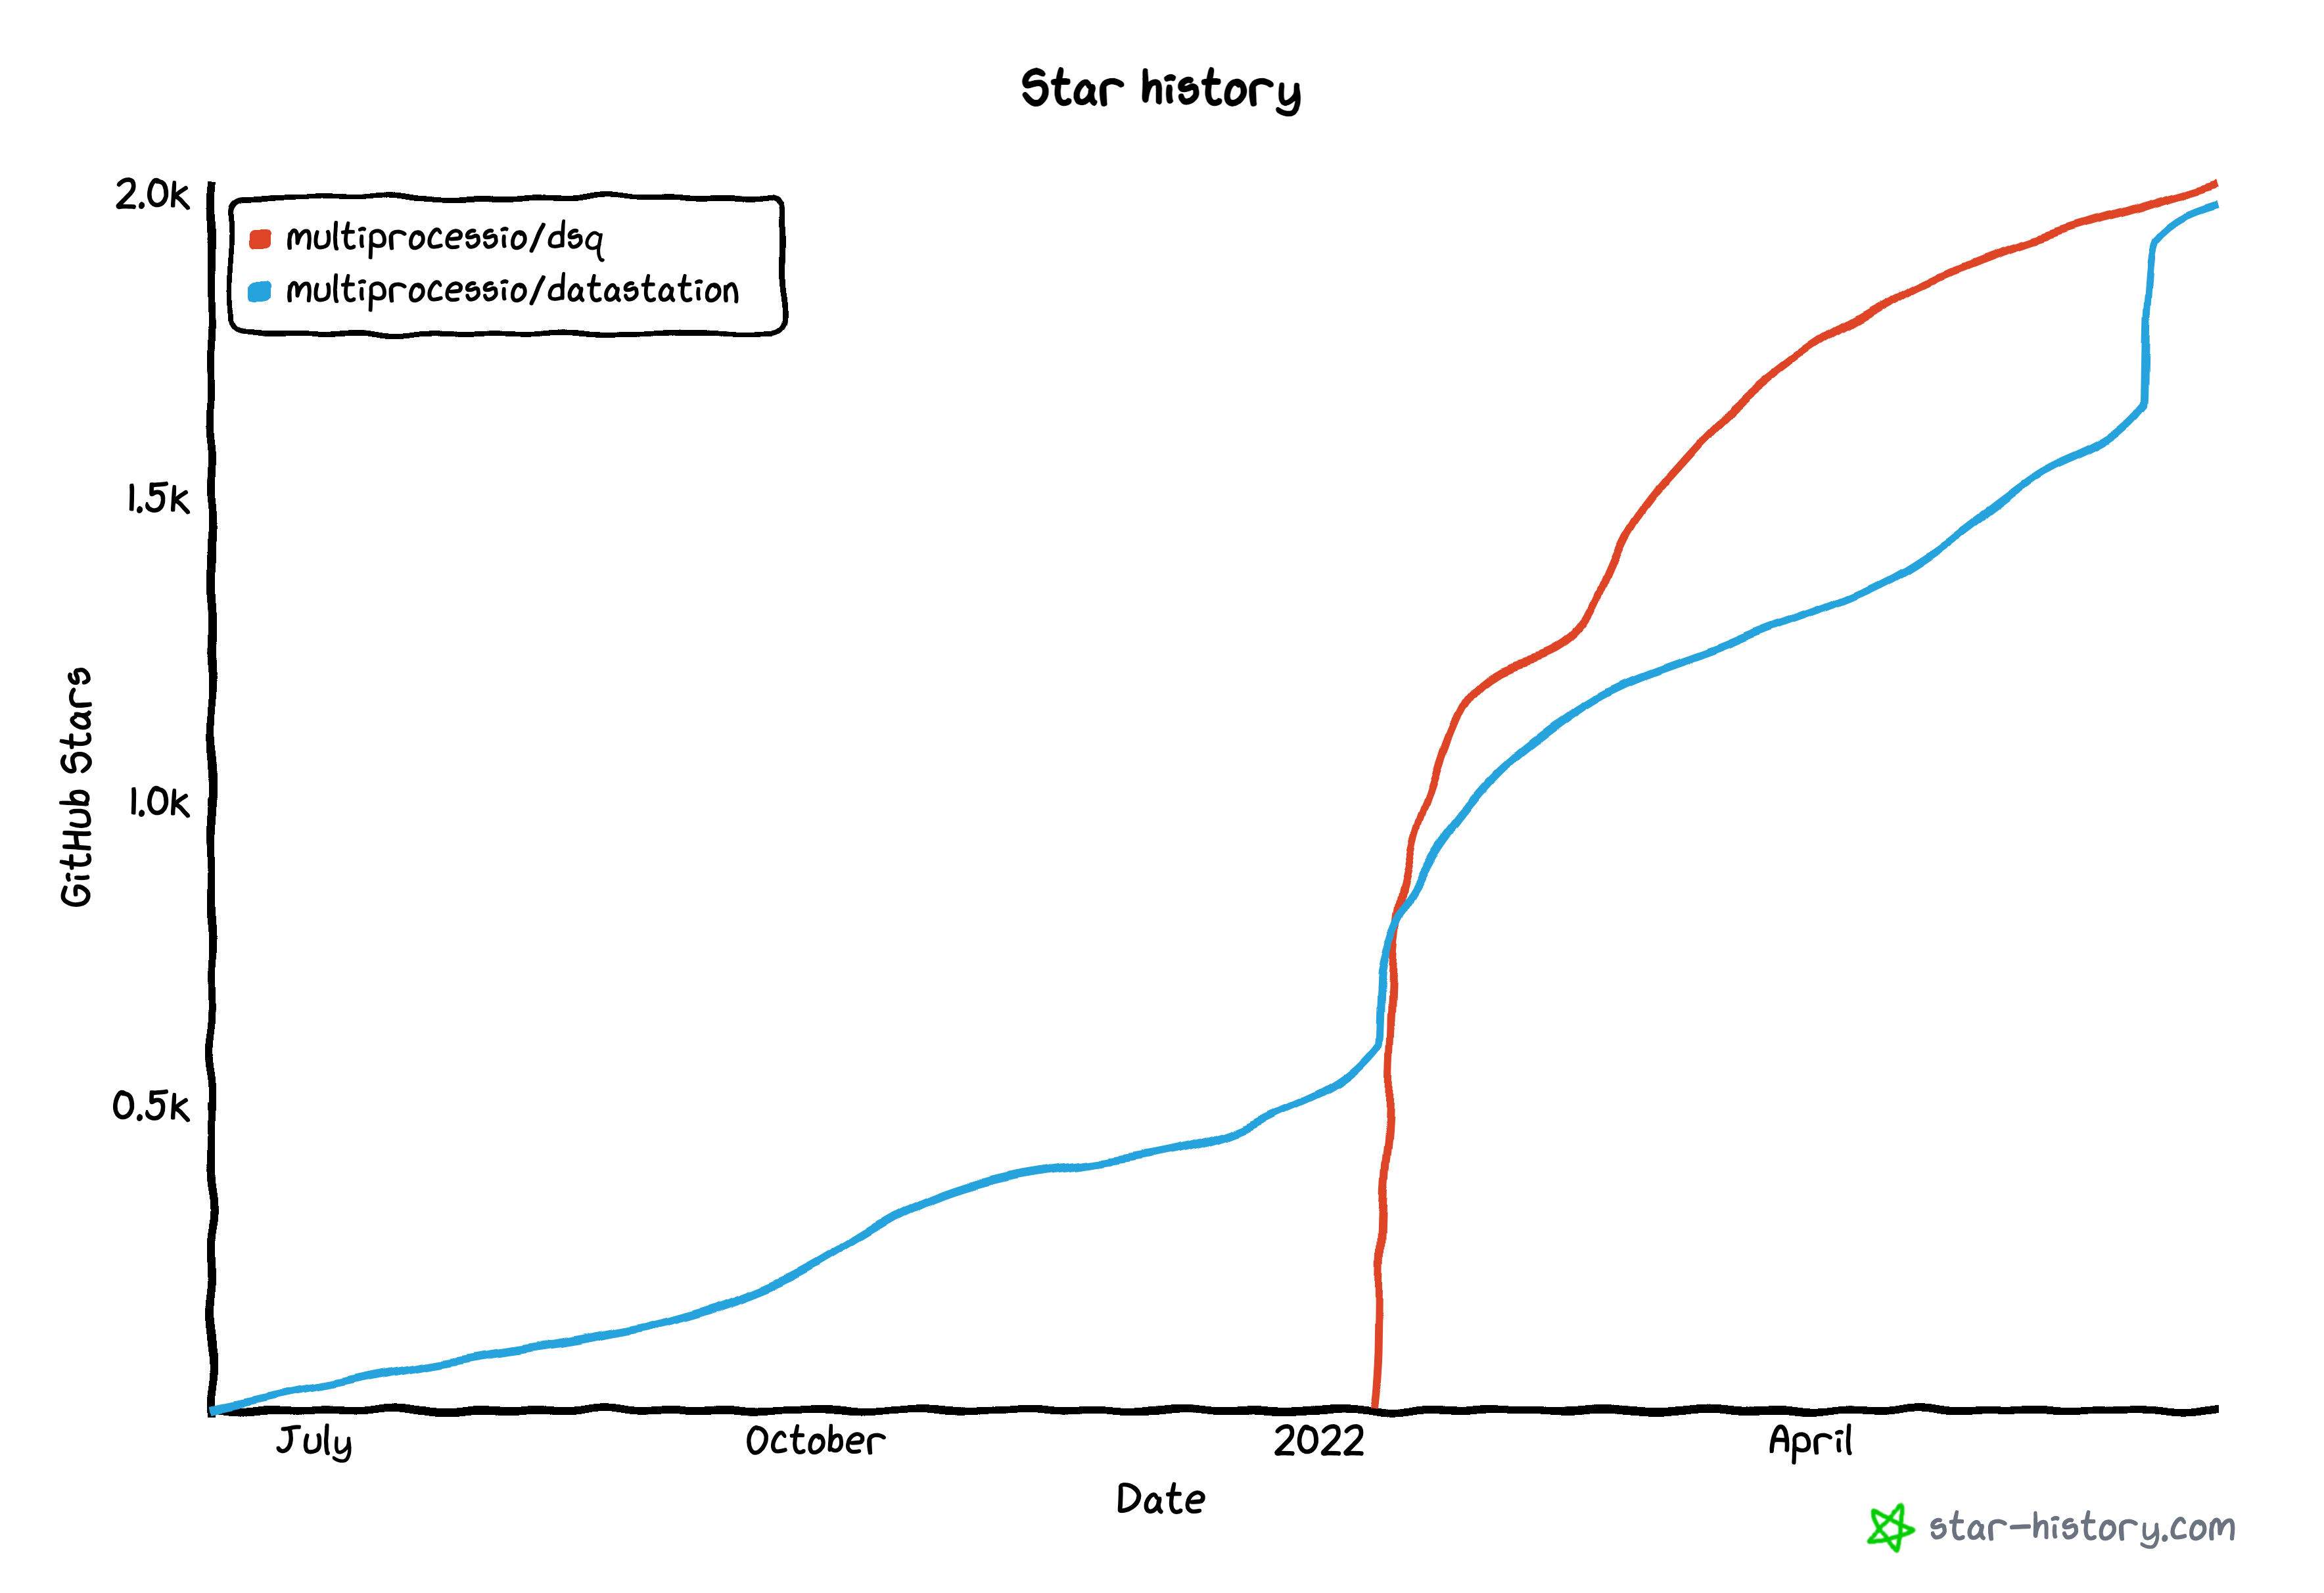 DataStation and dsq star history